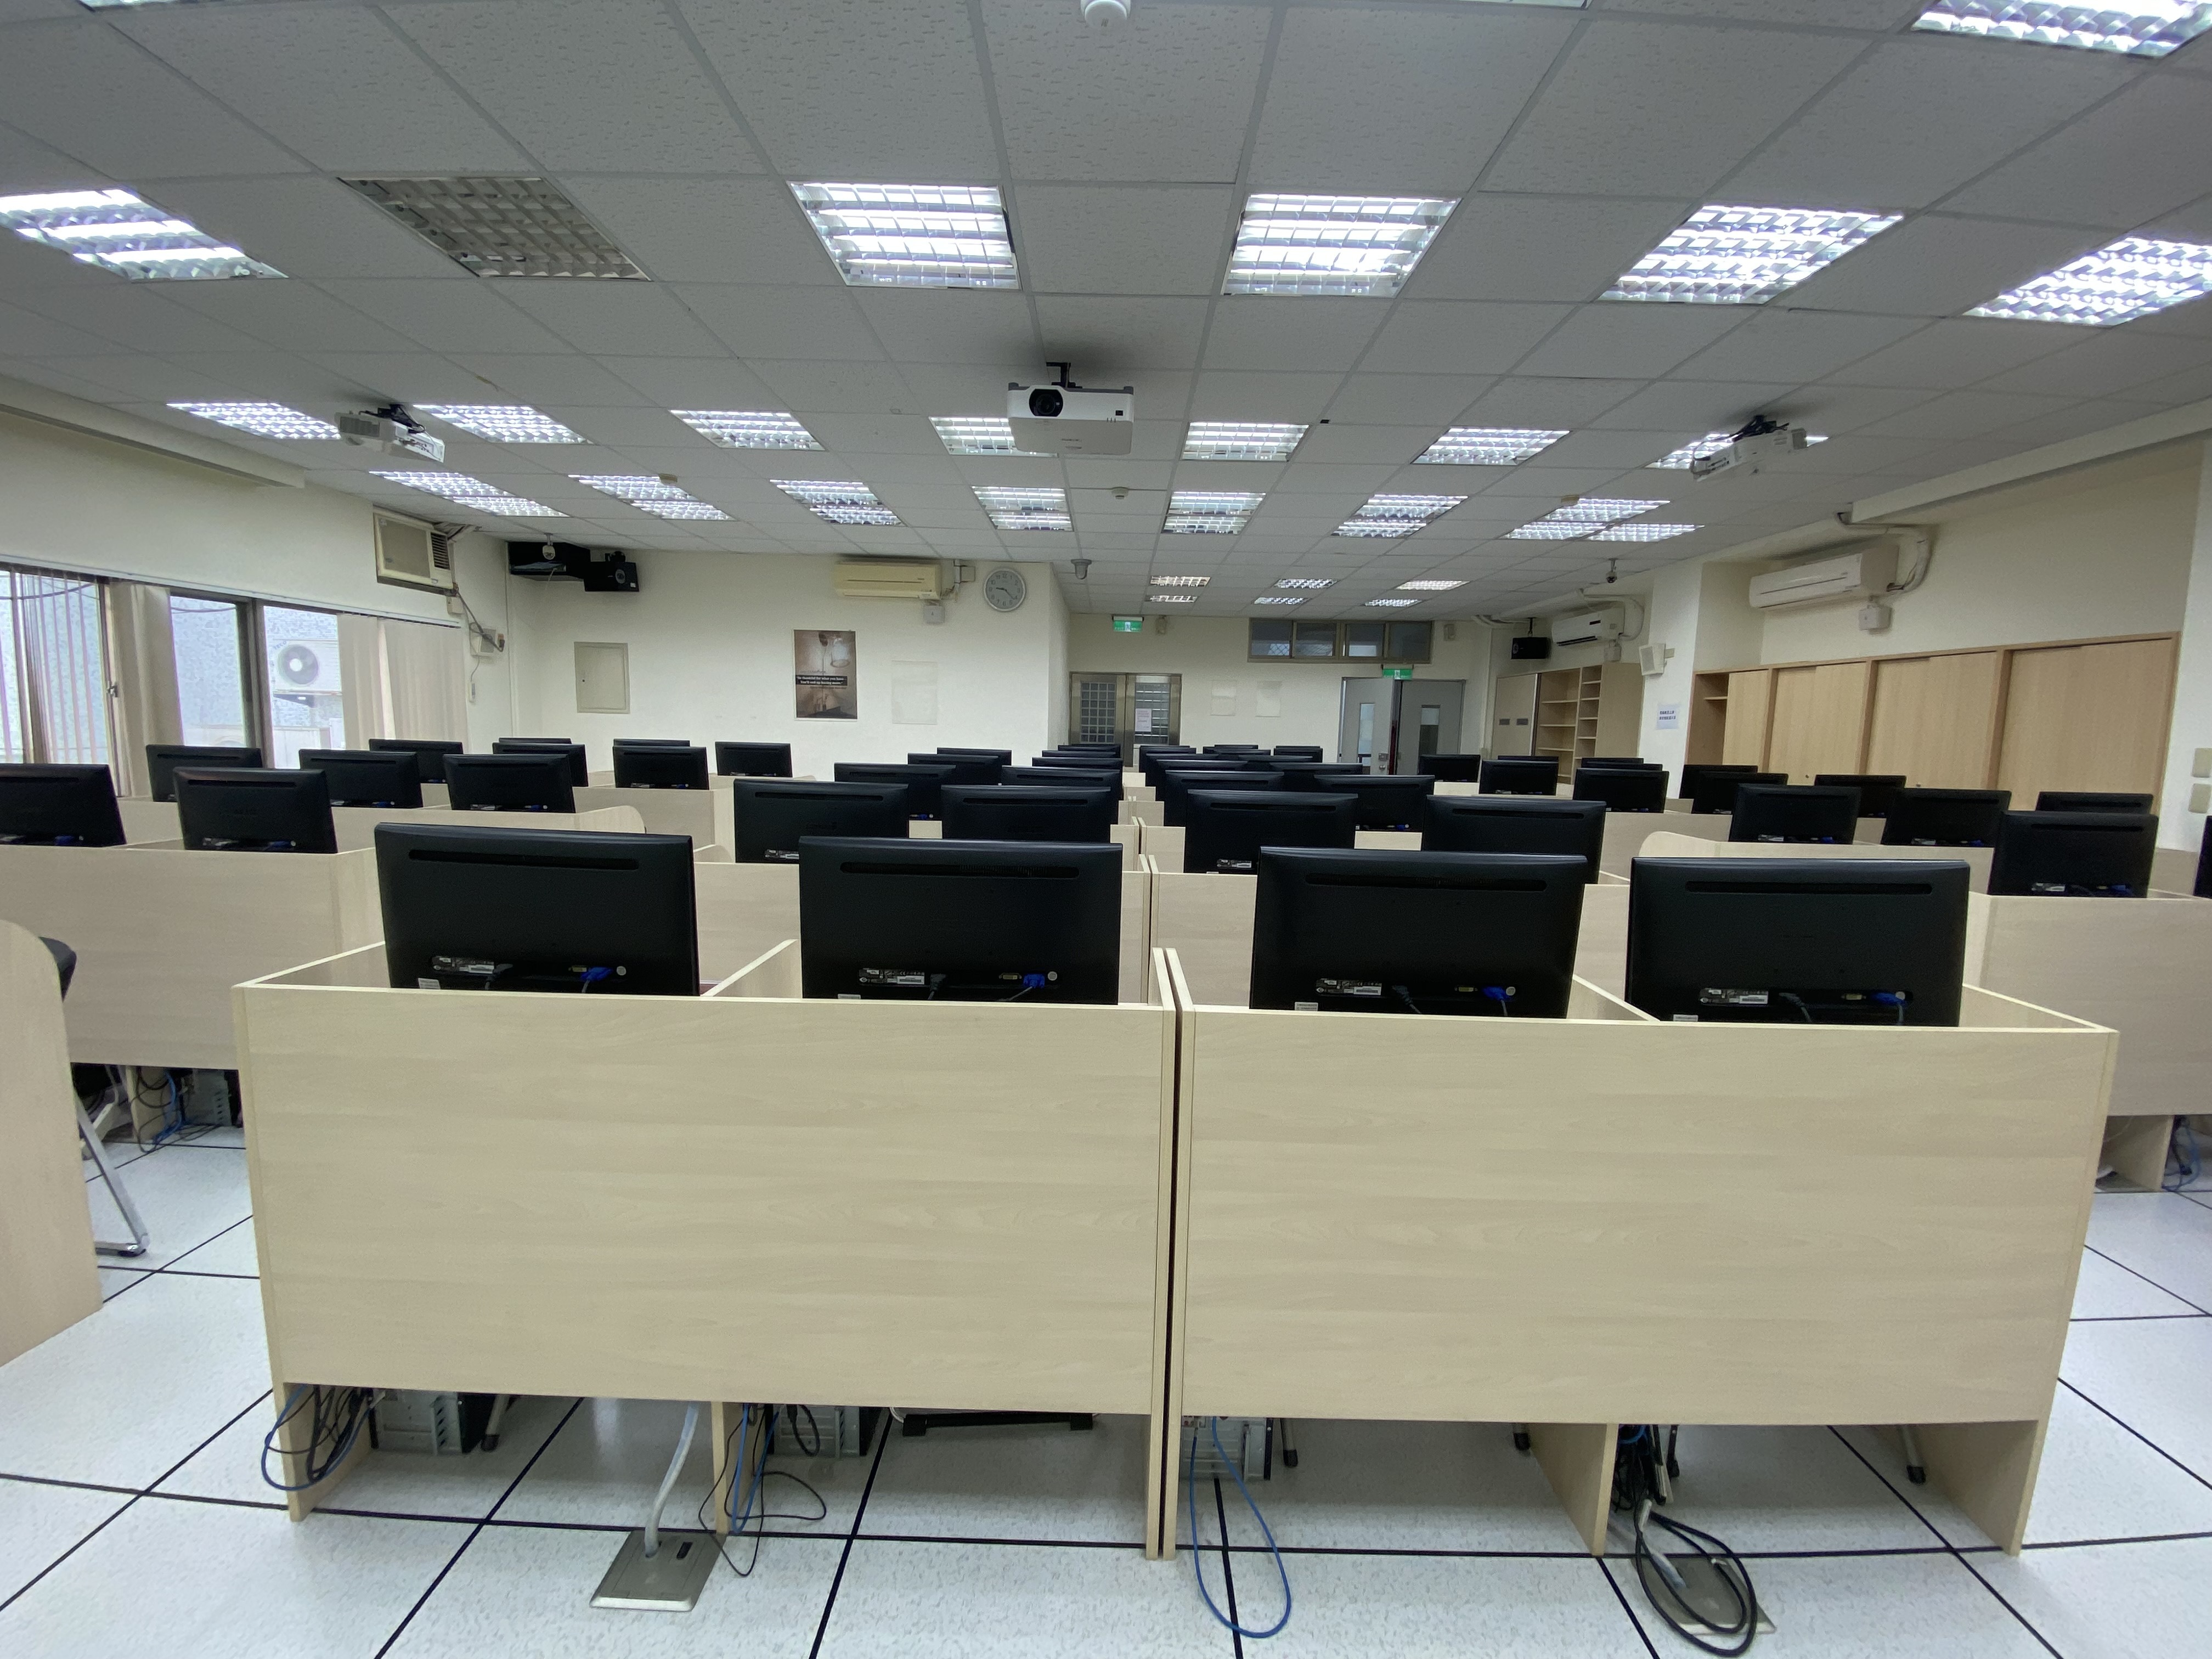 K502-1國際商務應用電腦教室設備示意圖